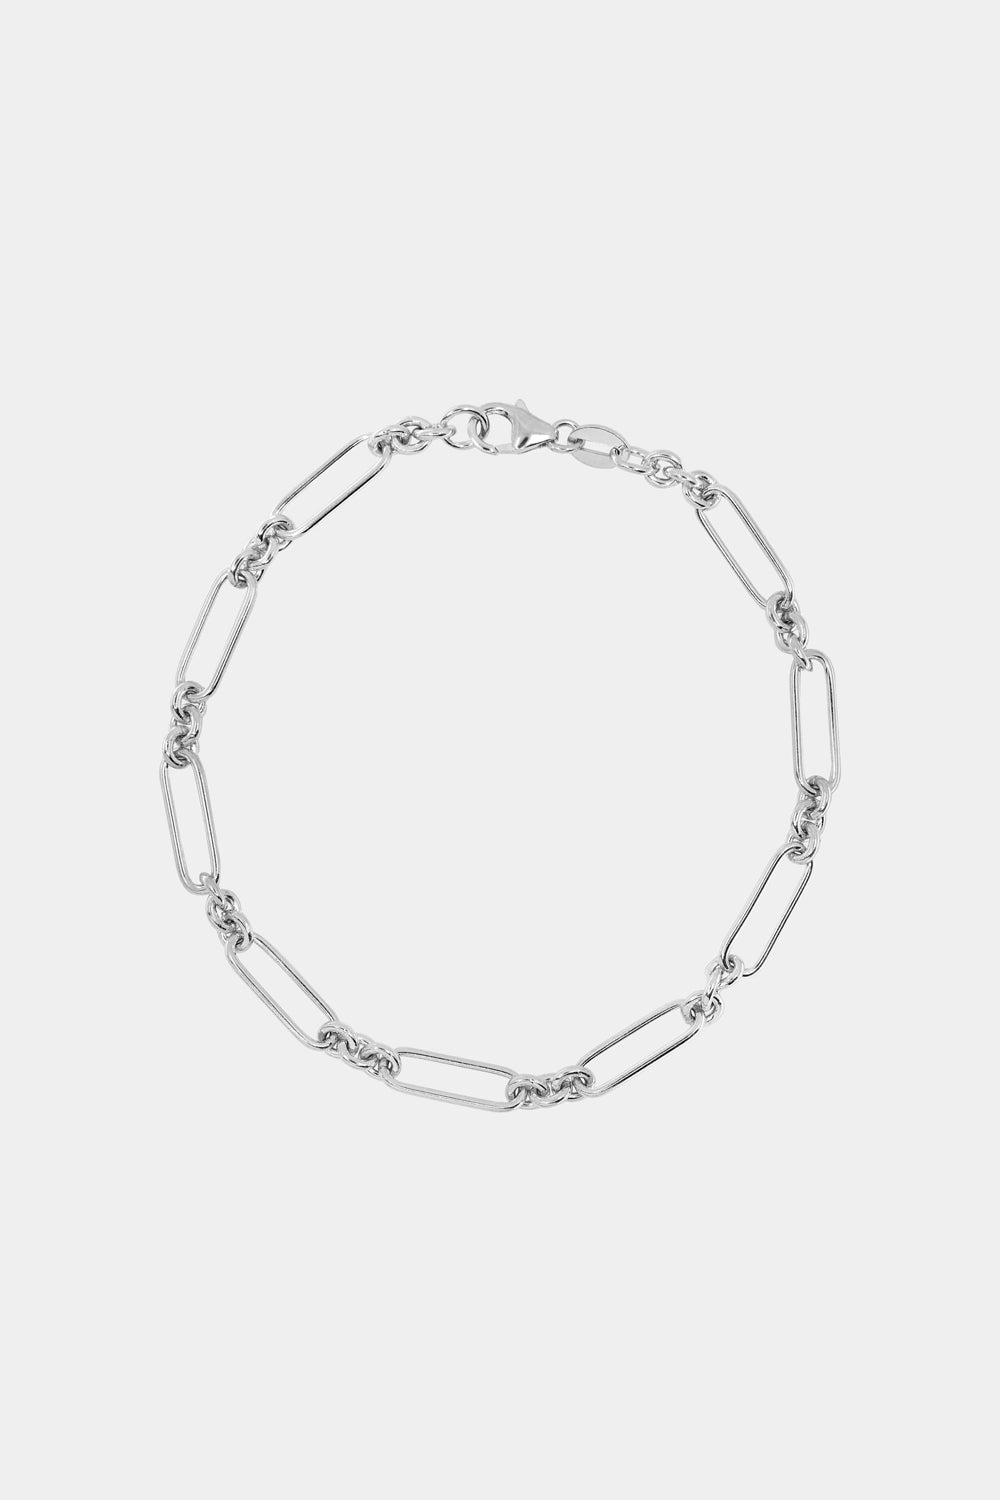 Mini Lennox Bracelet | Silver or 9K White Gold, More Options Available